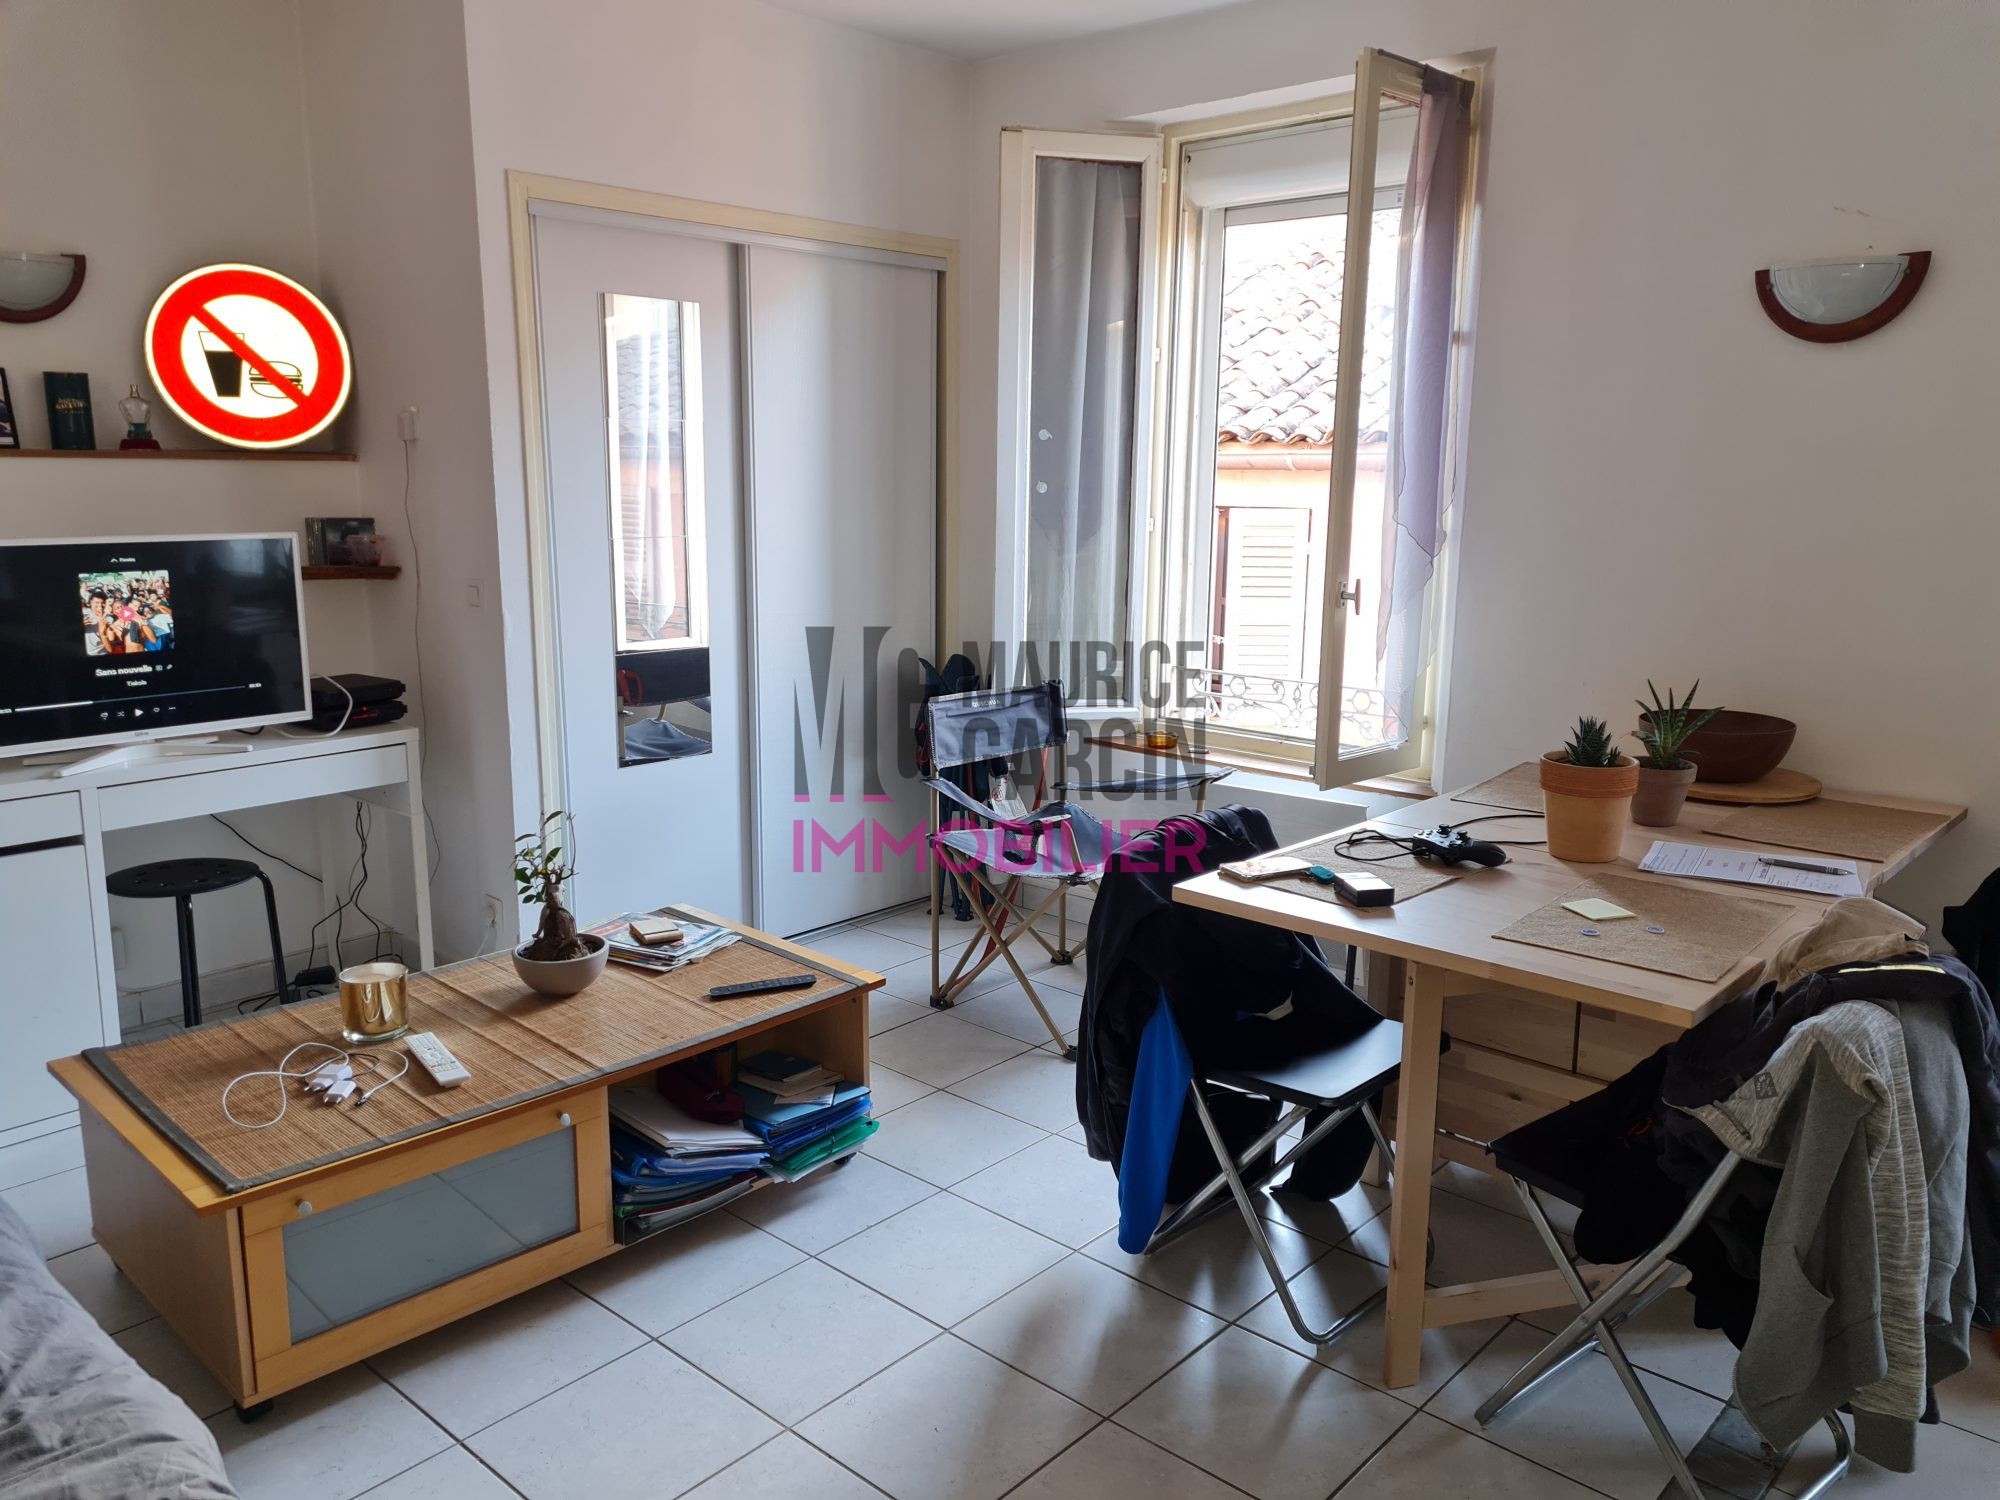 Vente Appartement 27m² 1 Pièce à Carpentras (84200) - Maurice Garcin